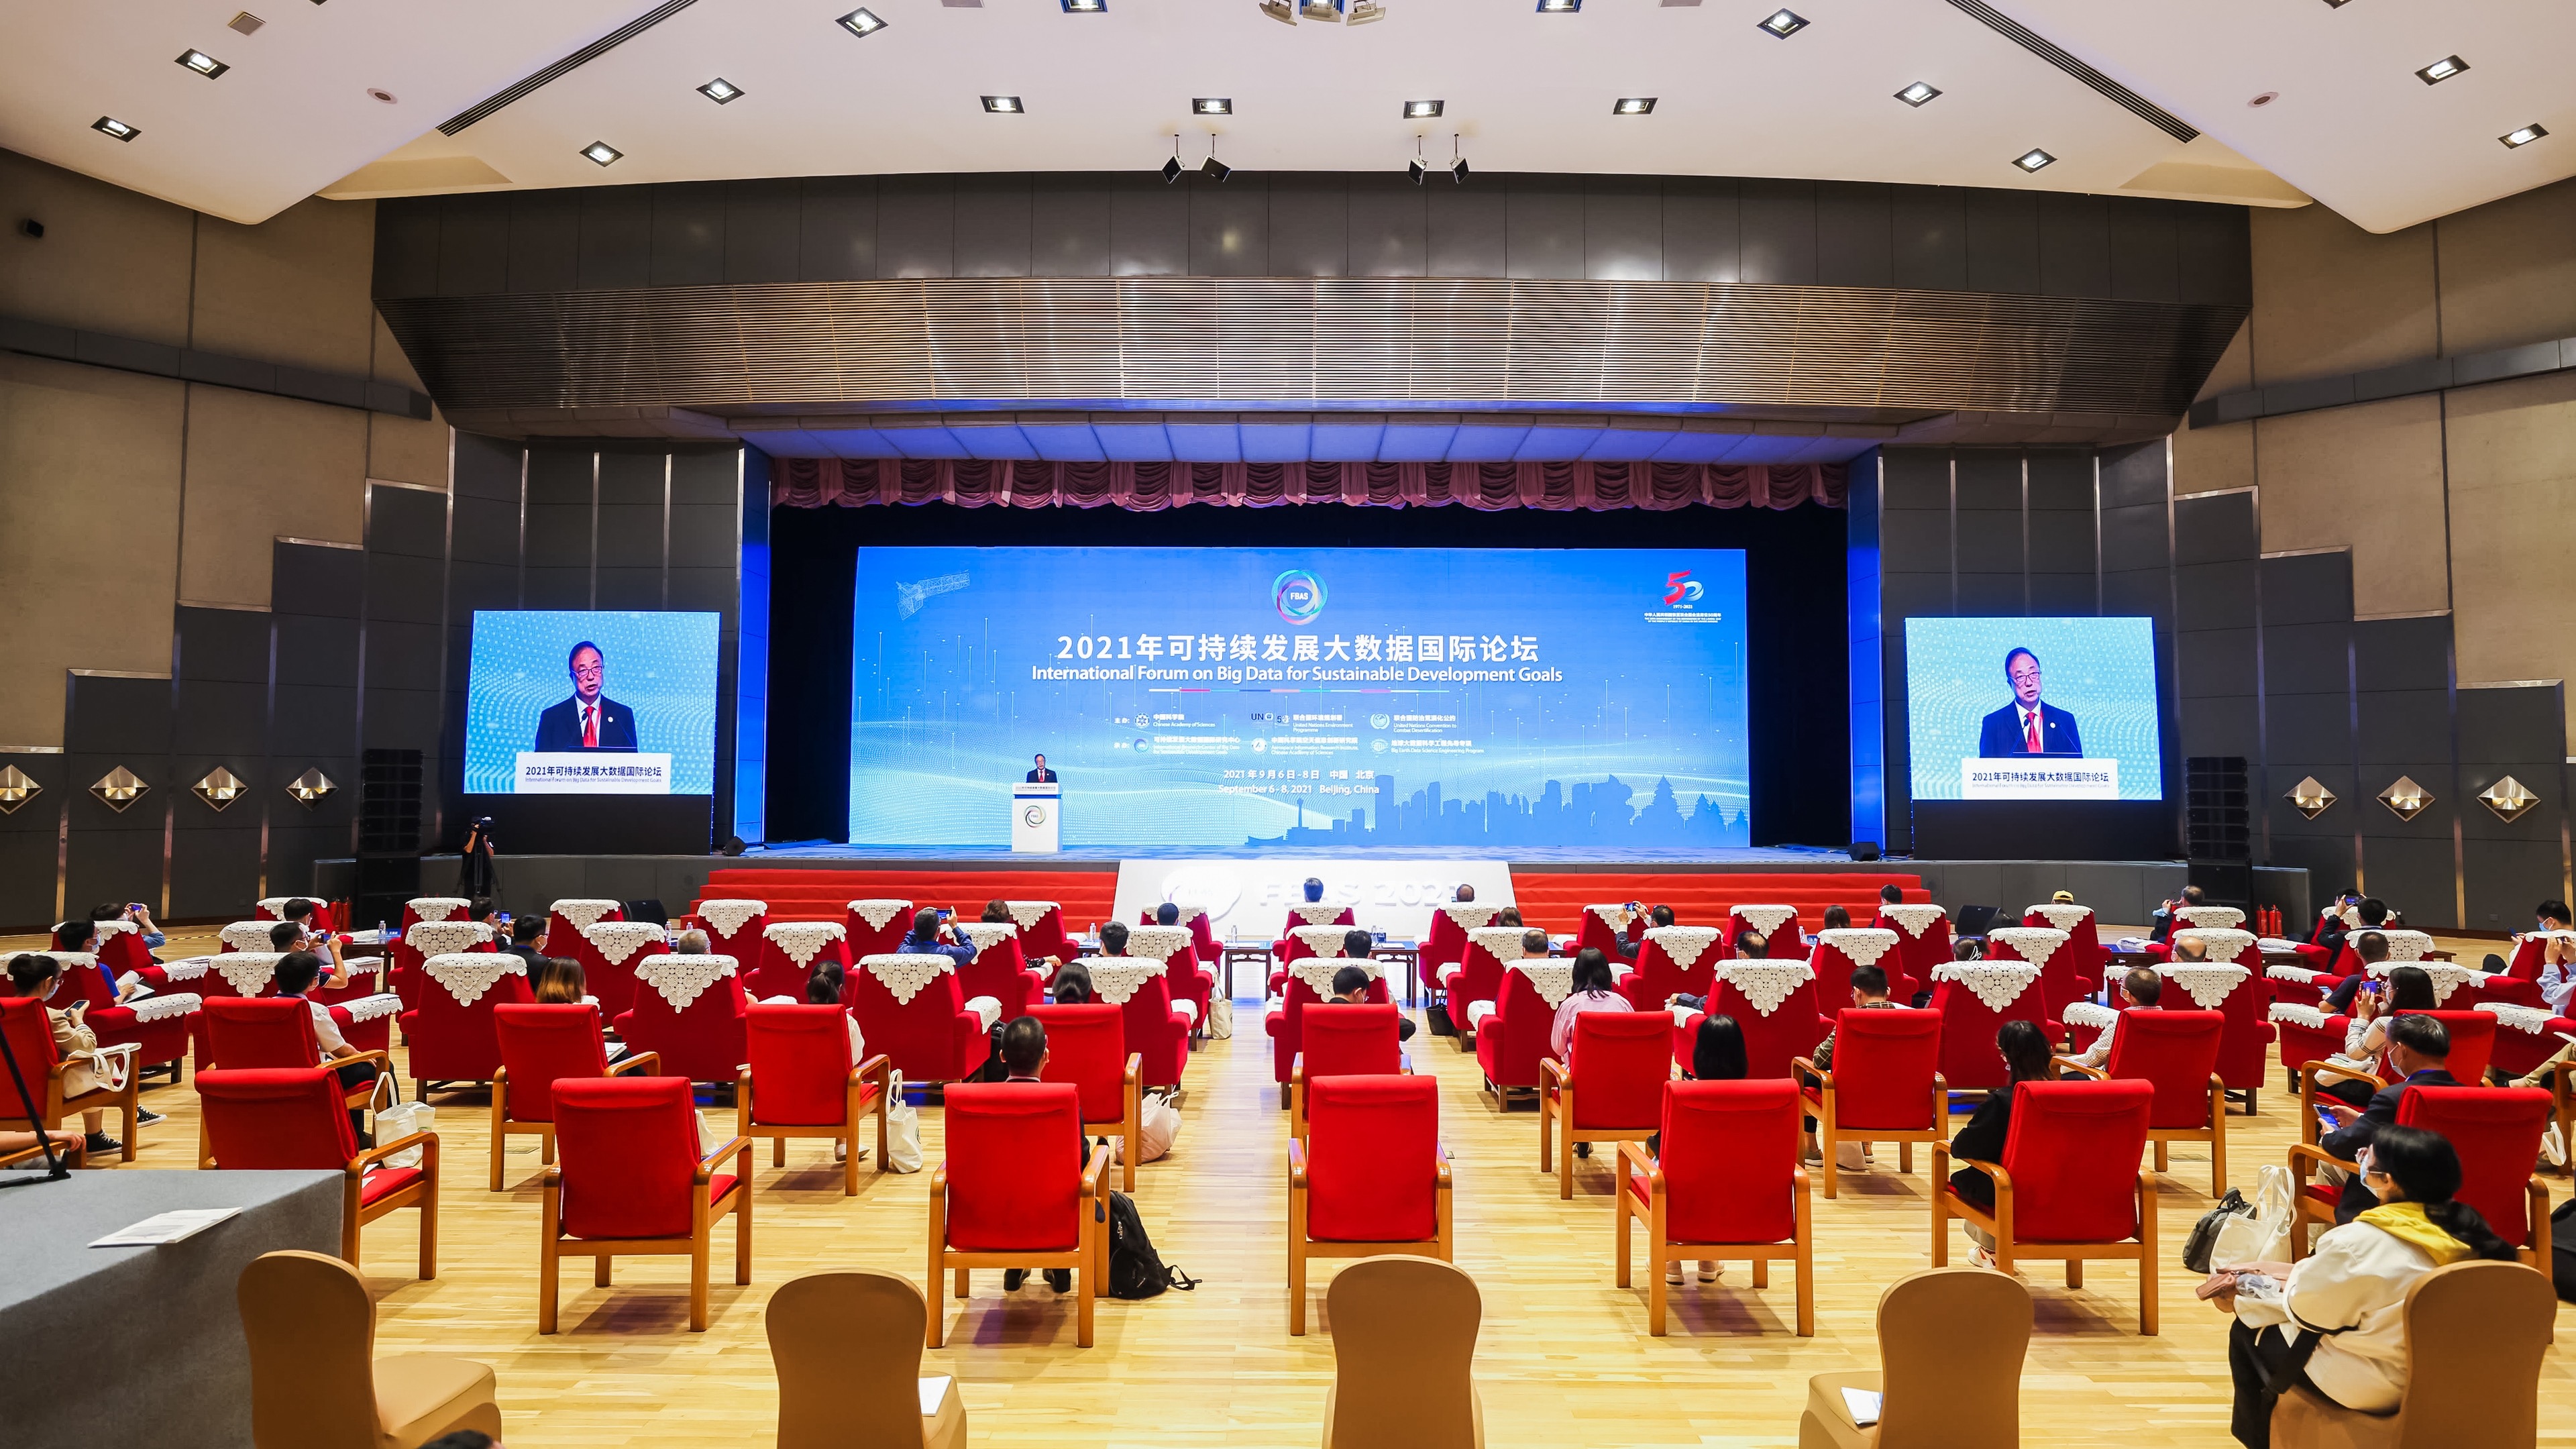 Xi: Innovation, Big Data to Aid 2030 Agenda